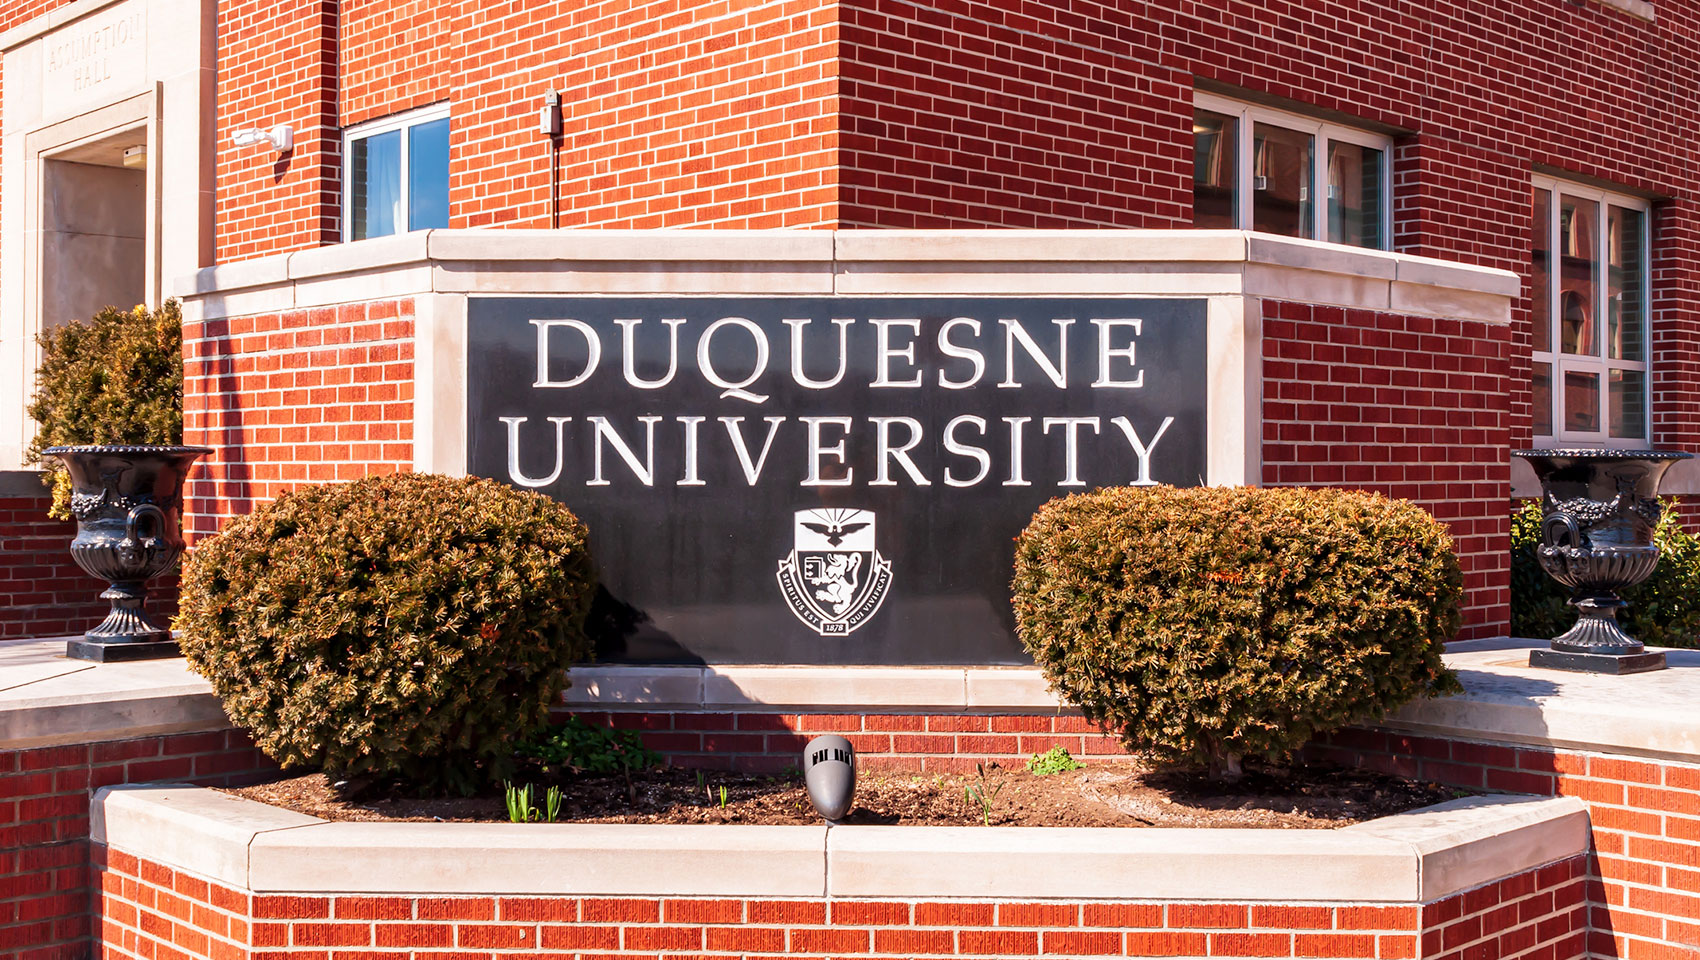 Duquesne University sign on a brick building